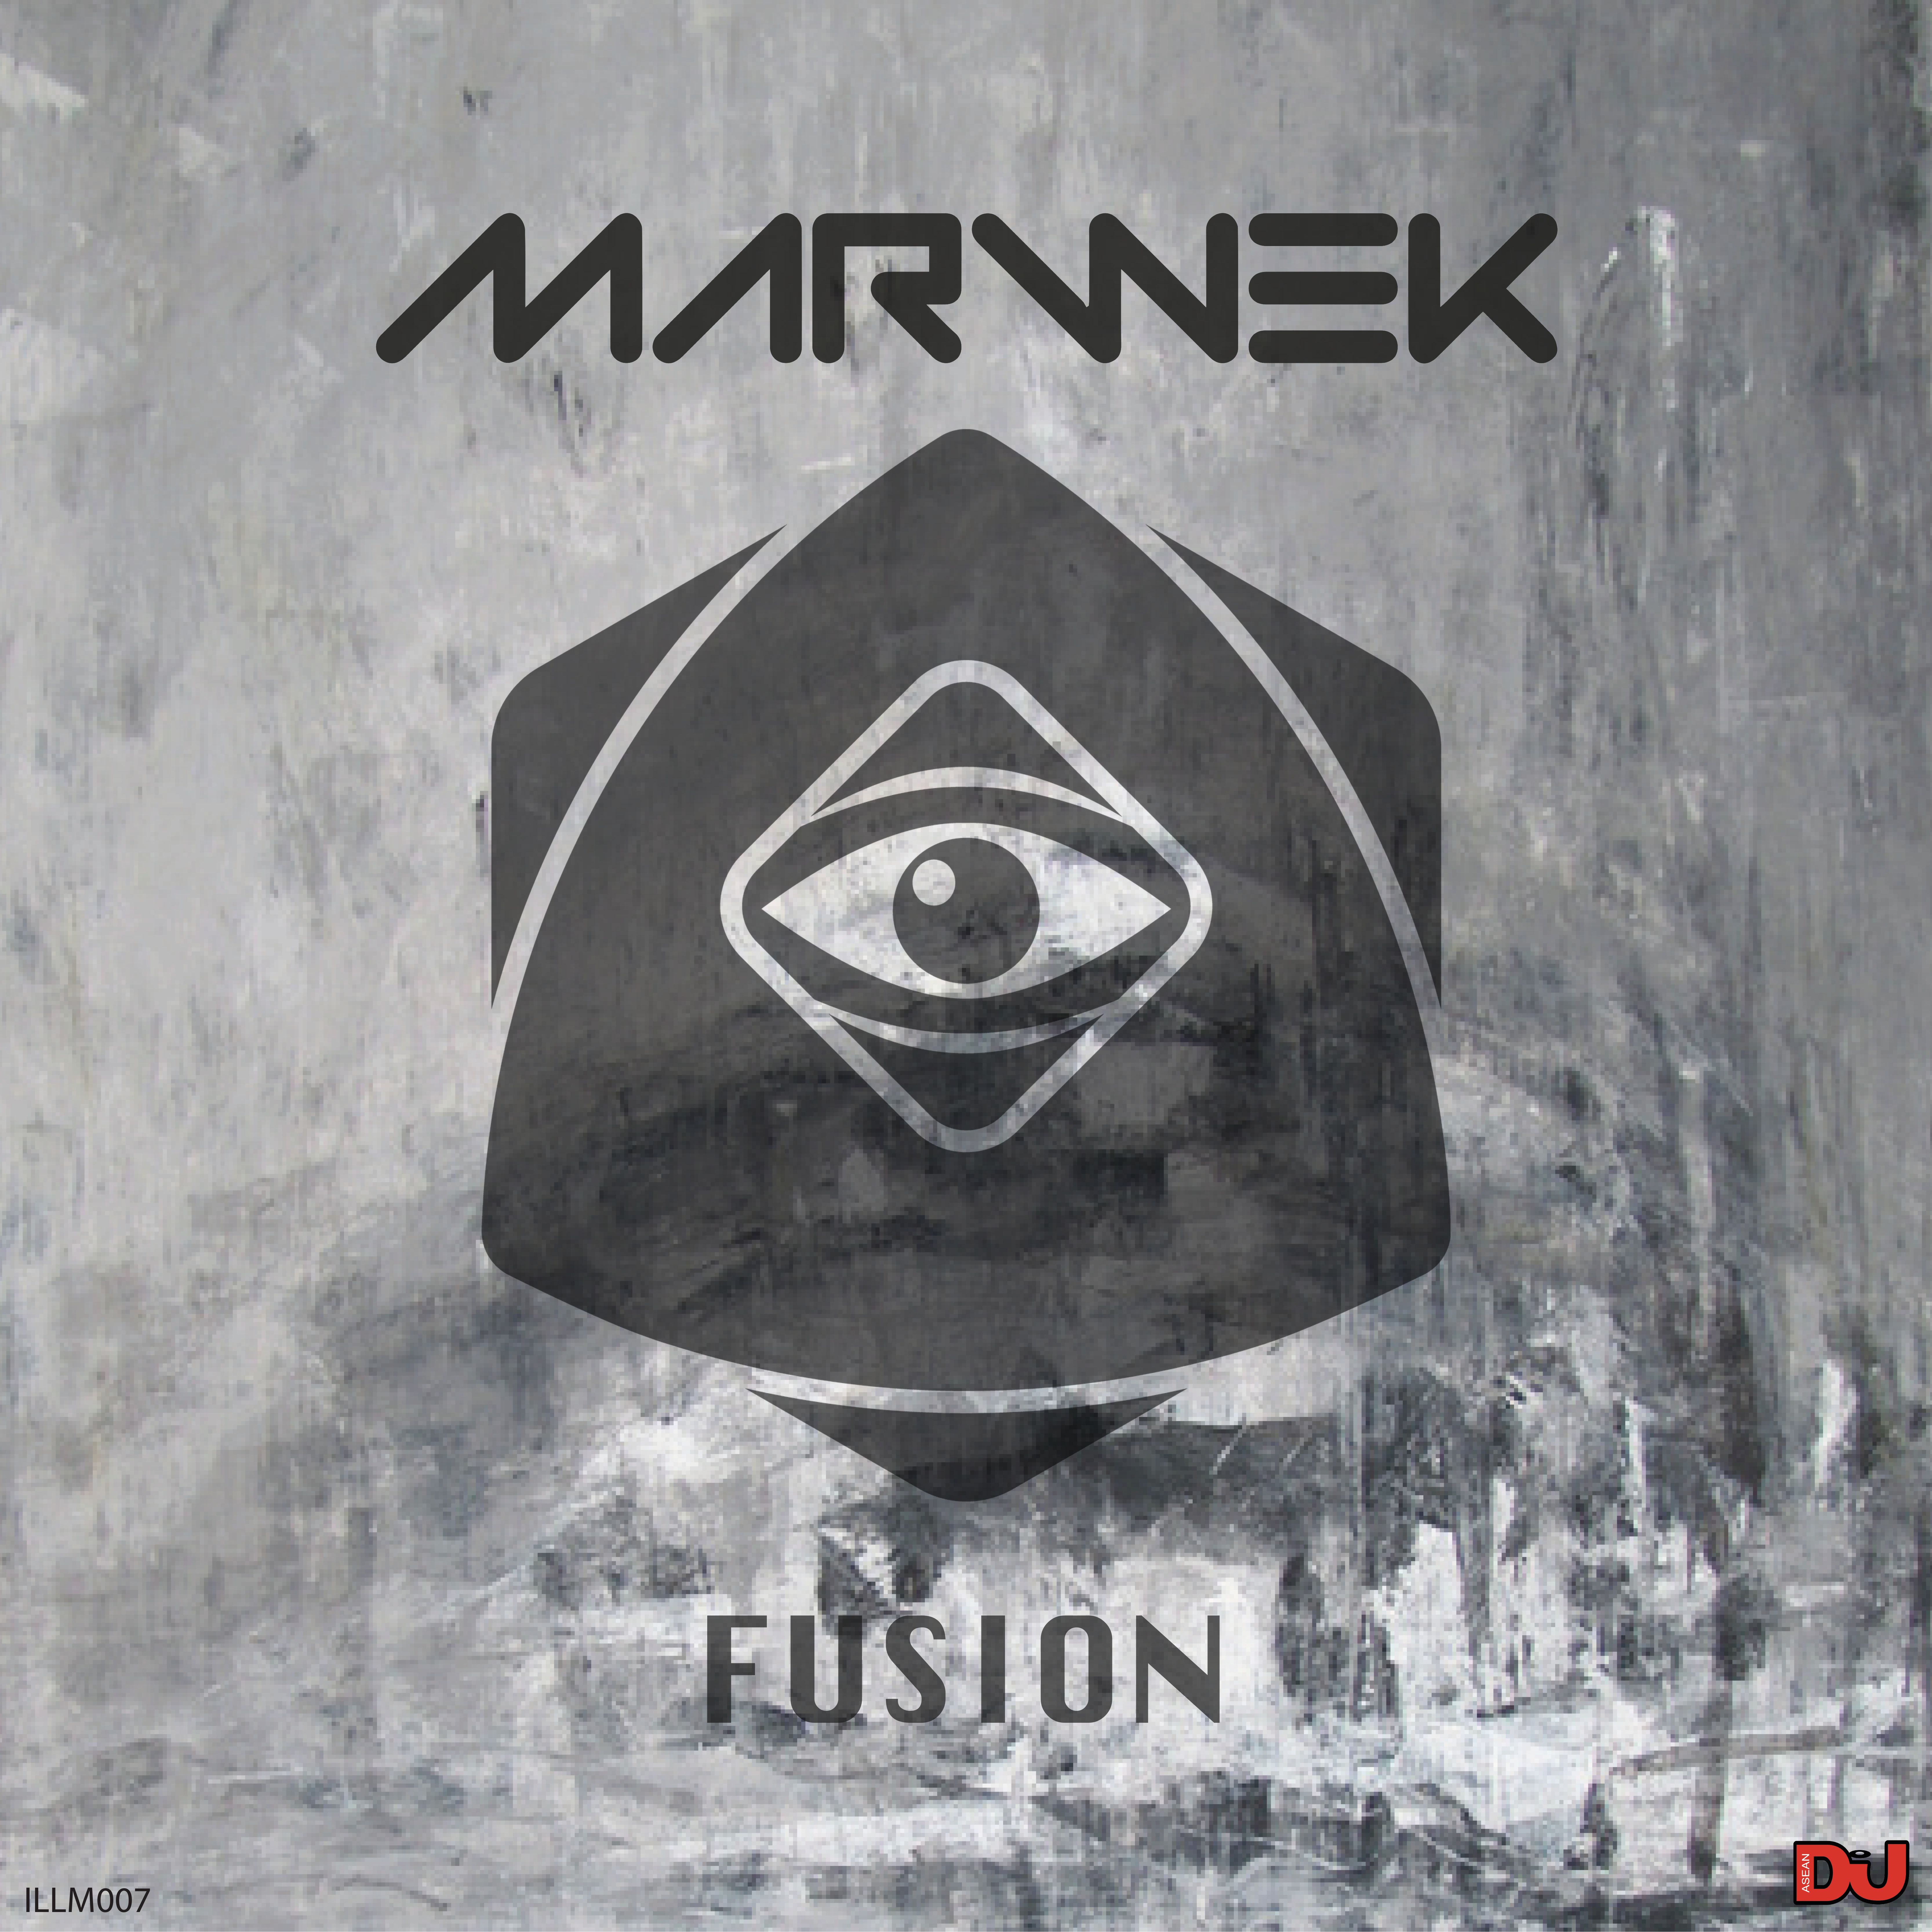 Khuphela Marwek - Fusion (Original Mix)